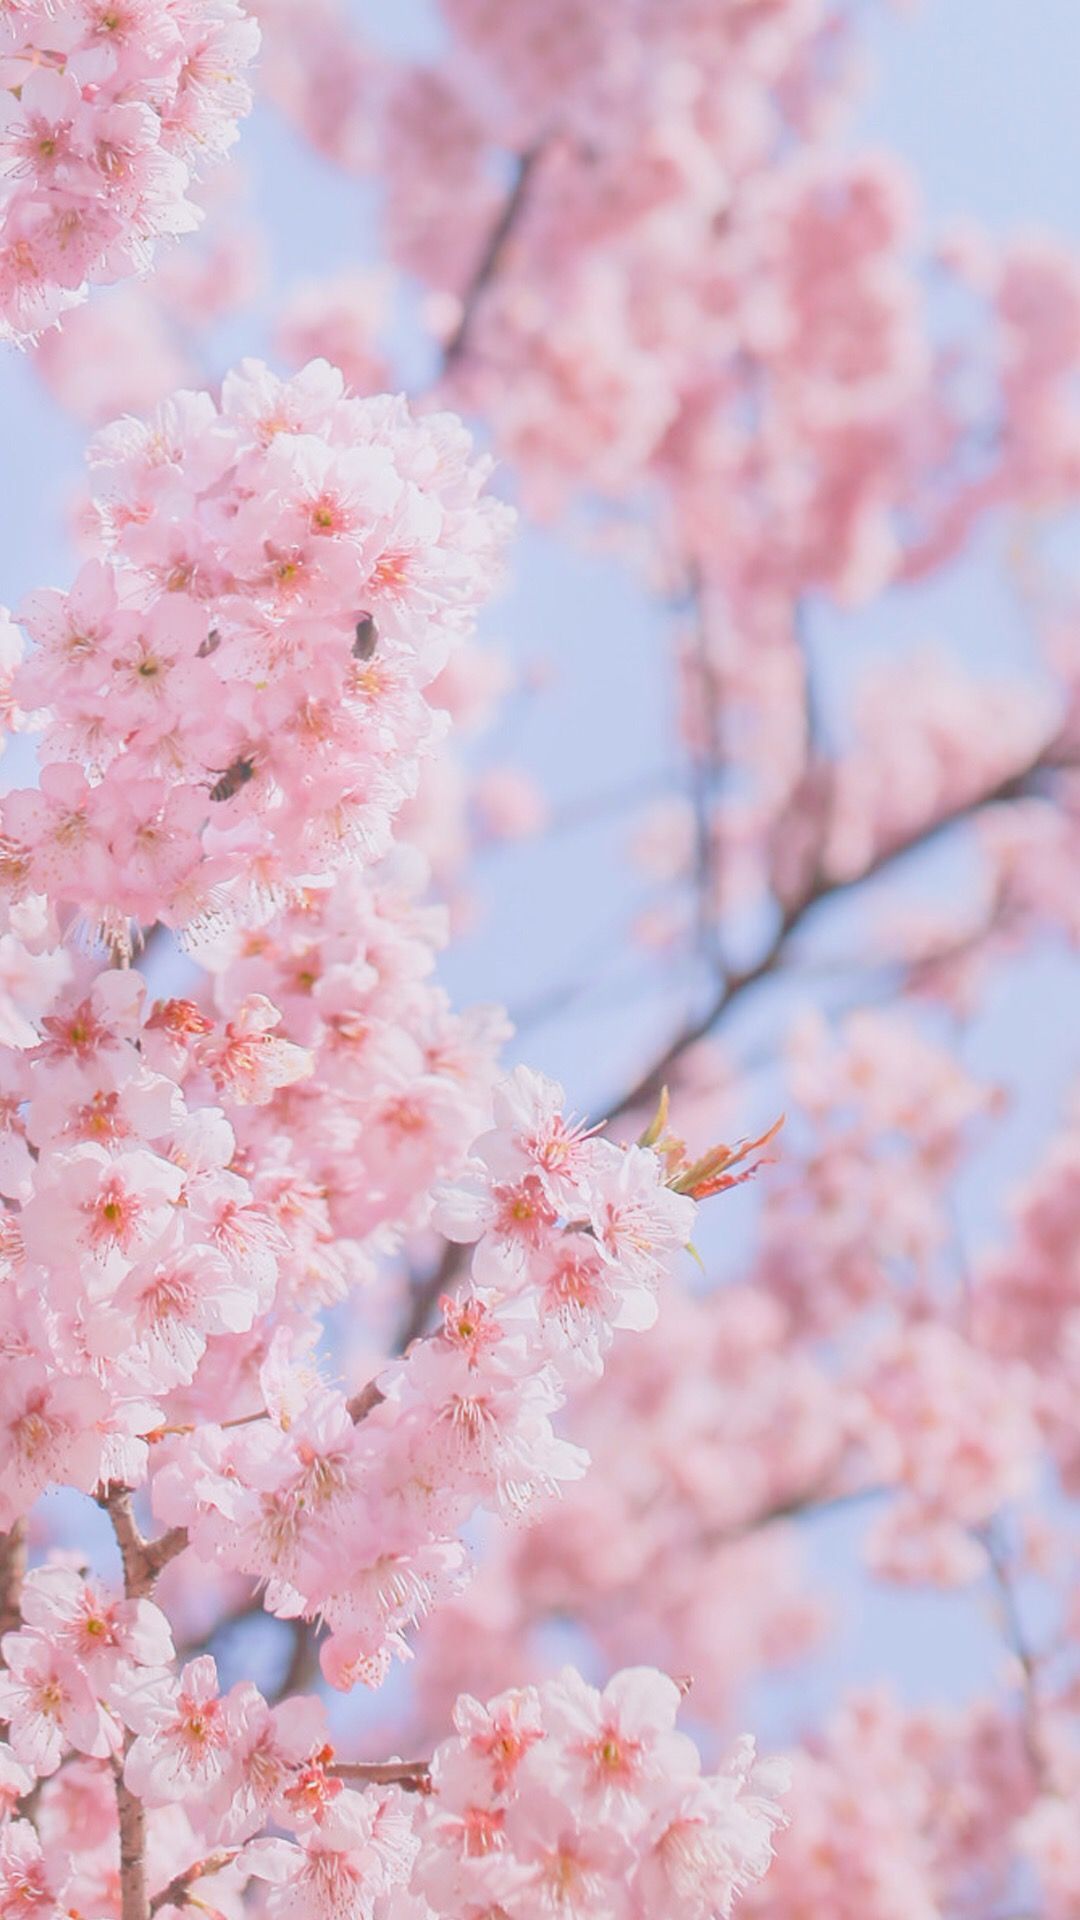 Cherry blossom backgroundscherry blossom backgrounds